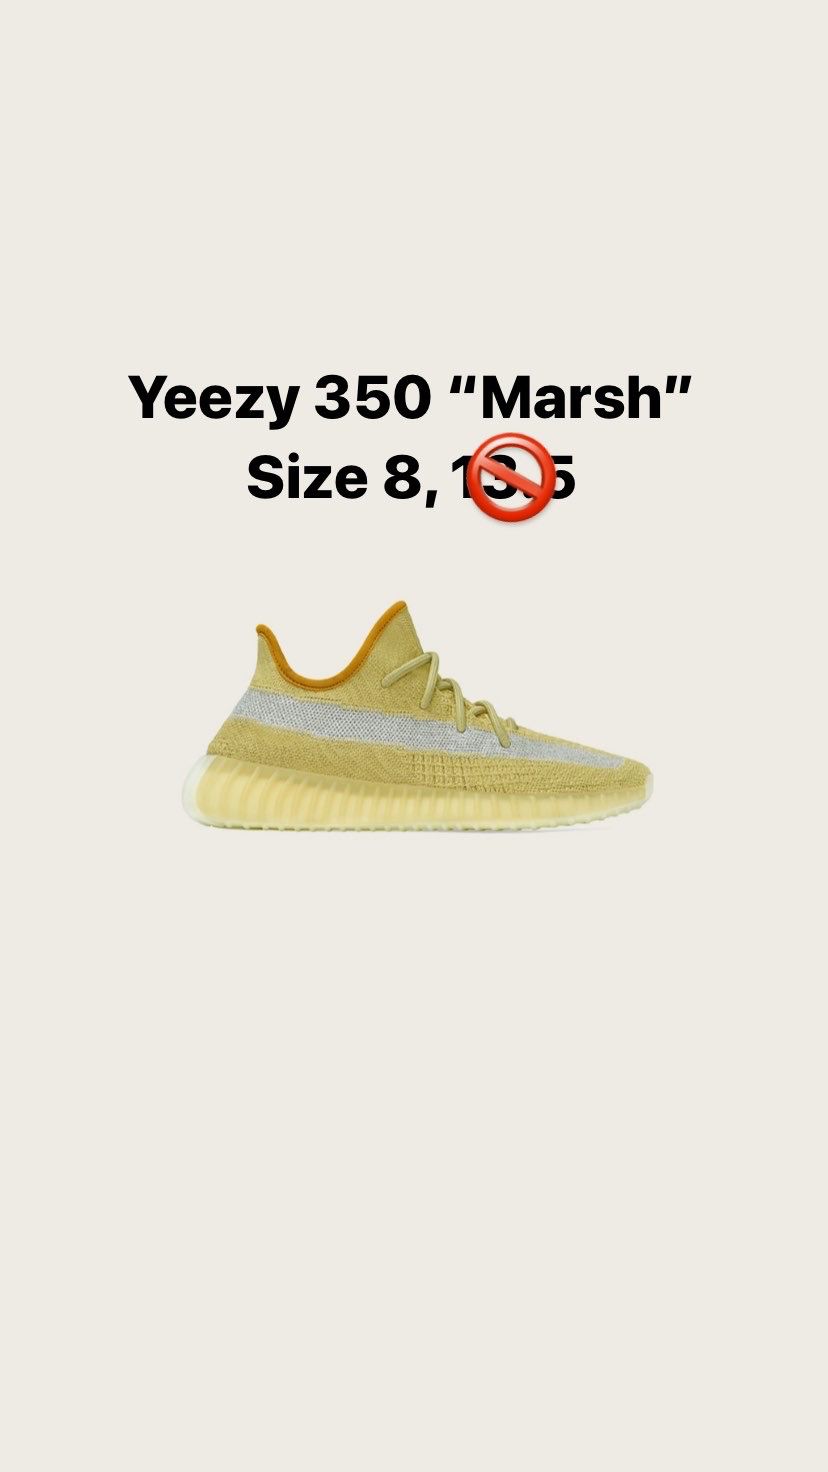 DS Yeezy 350 “Marsh” size 8